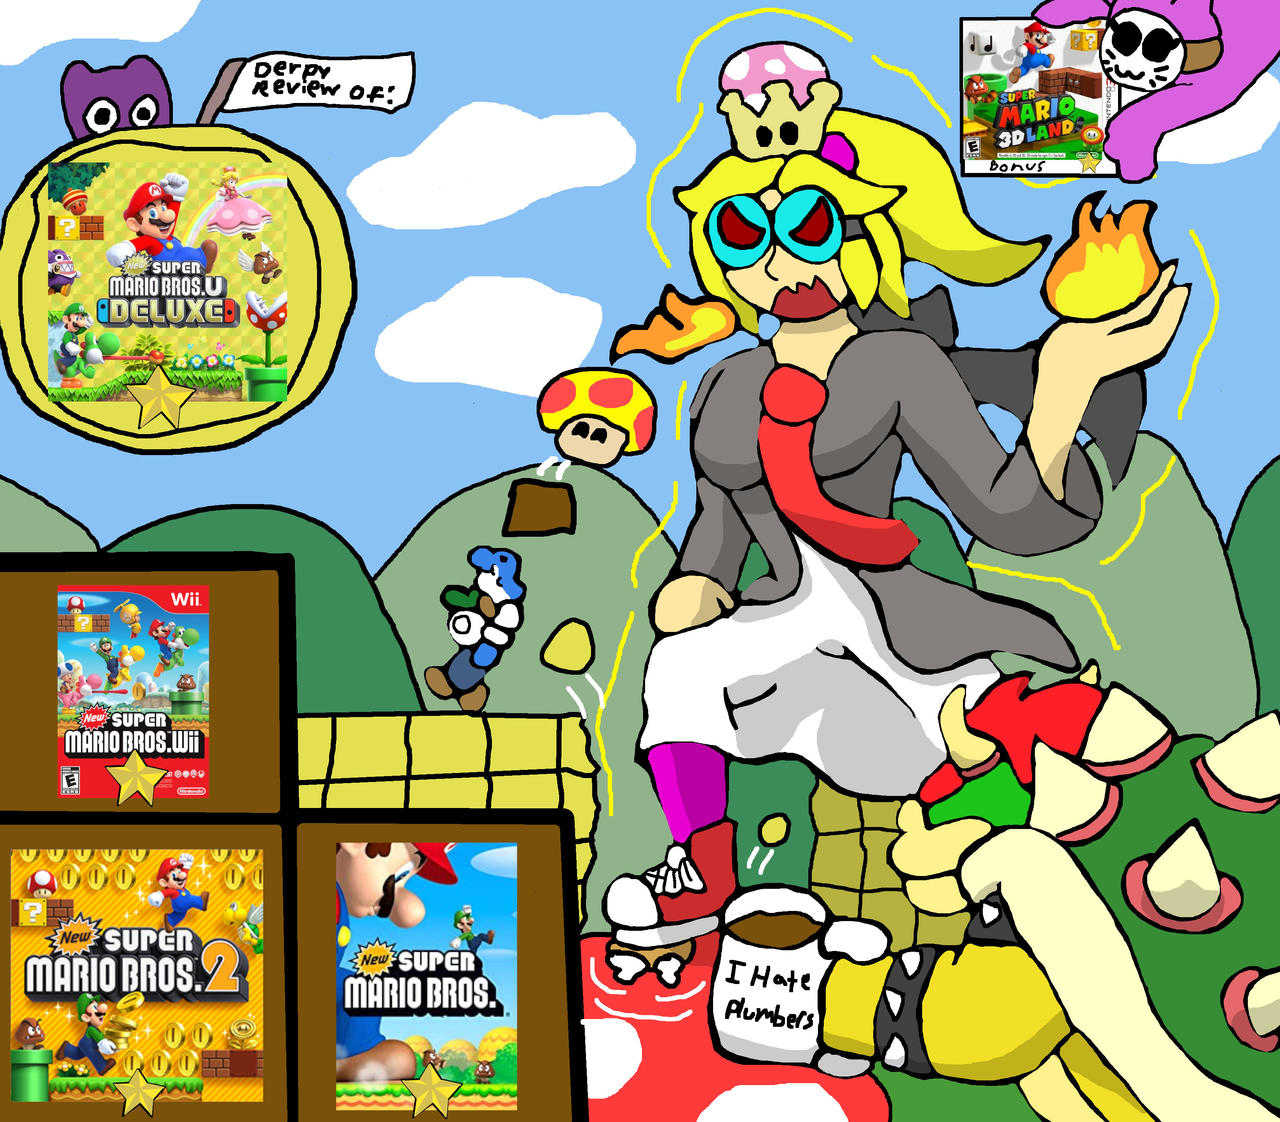 New Super Mario Bros Wii (Wii Review) - Arcade Attack